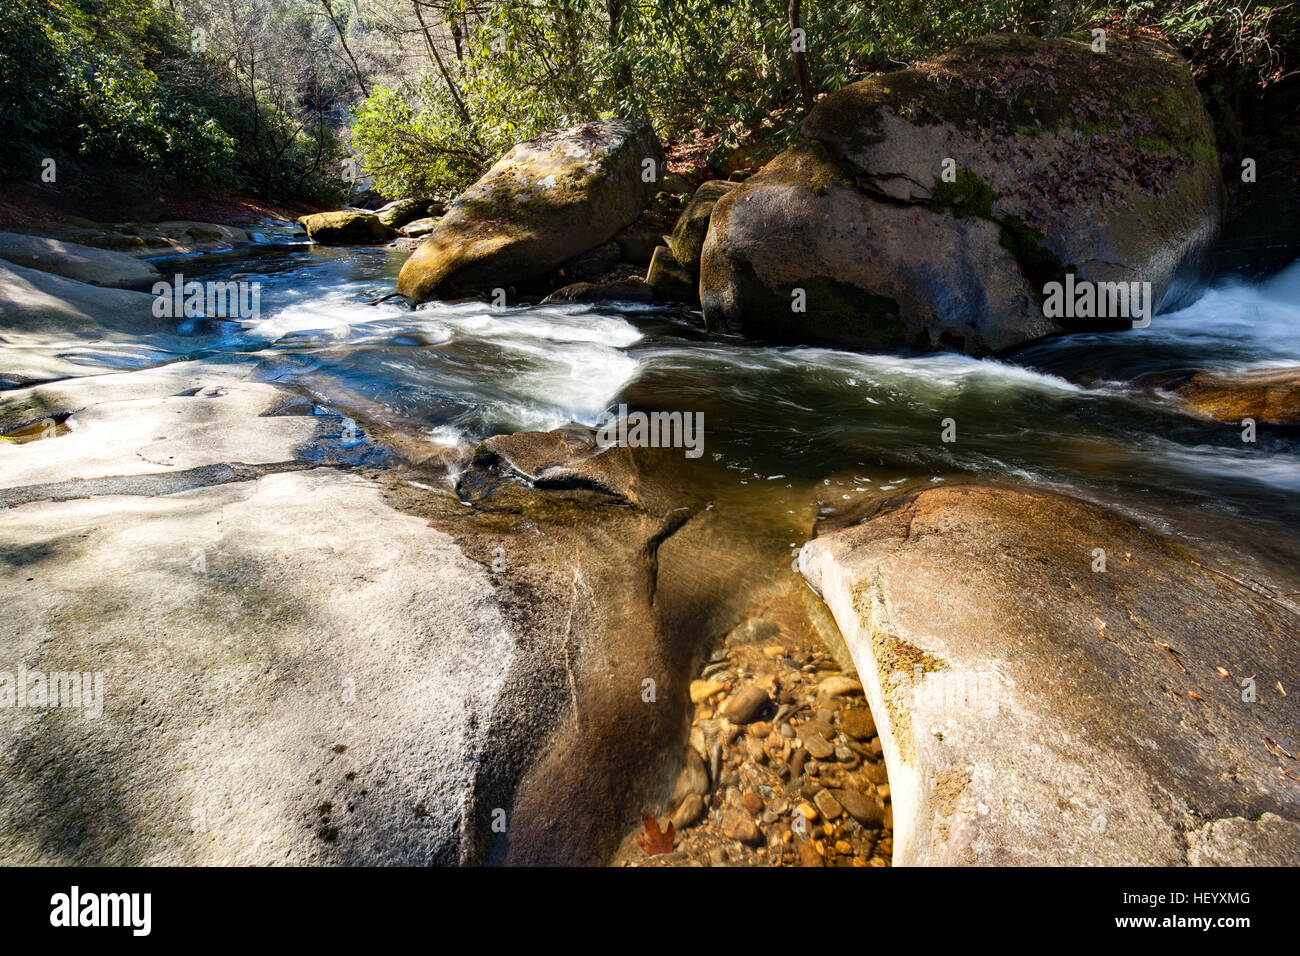 French Broad River in der Nähe von Living Waters - Balsam Grove, North Carolina USA Stockfoto